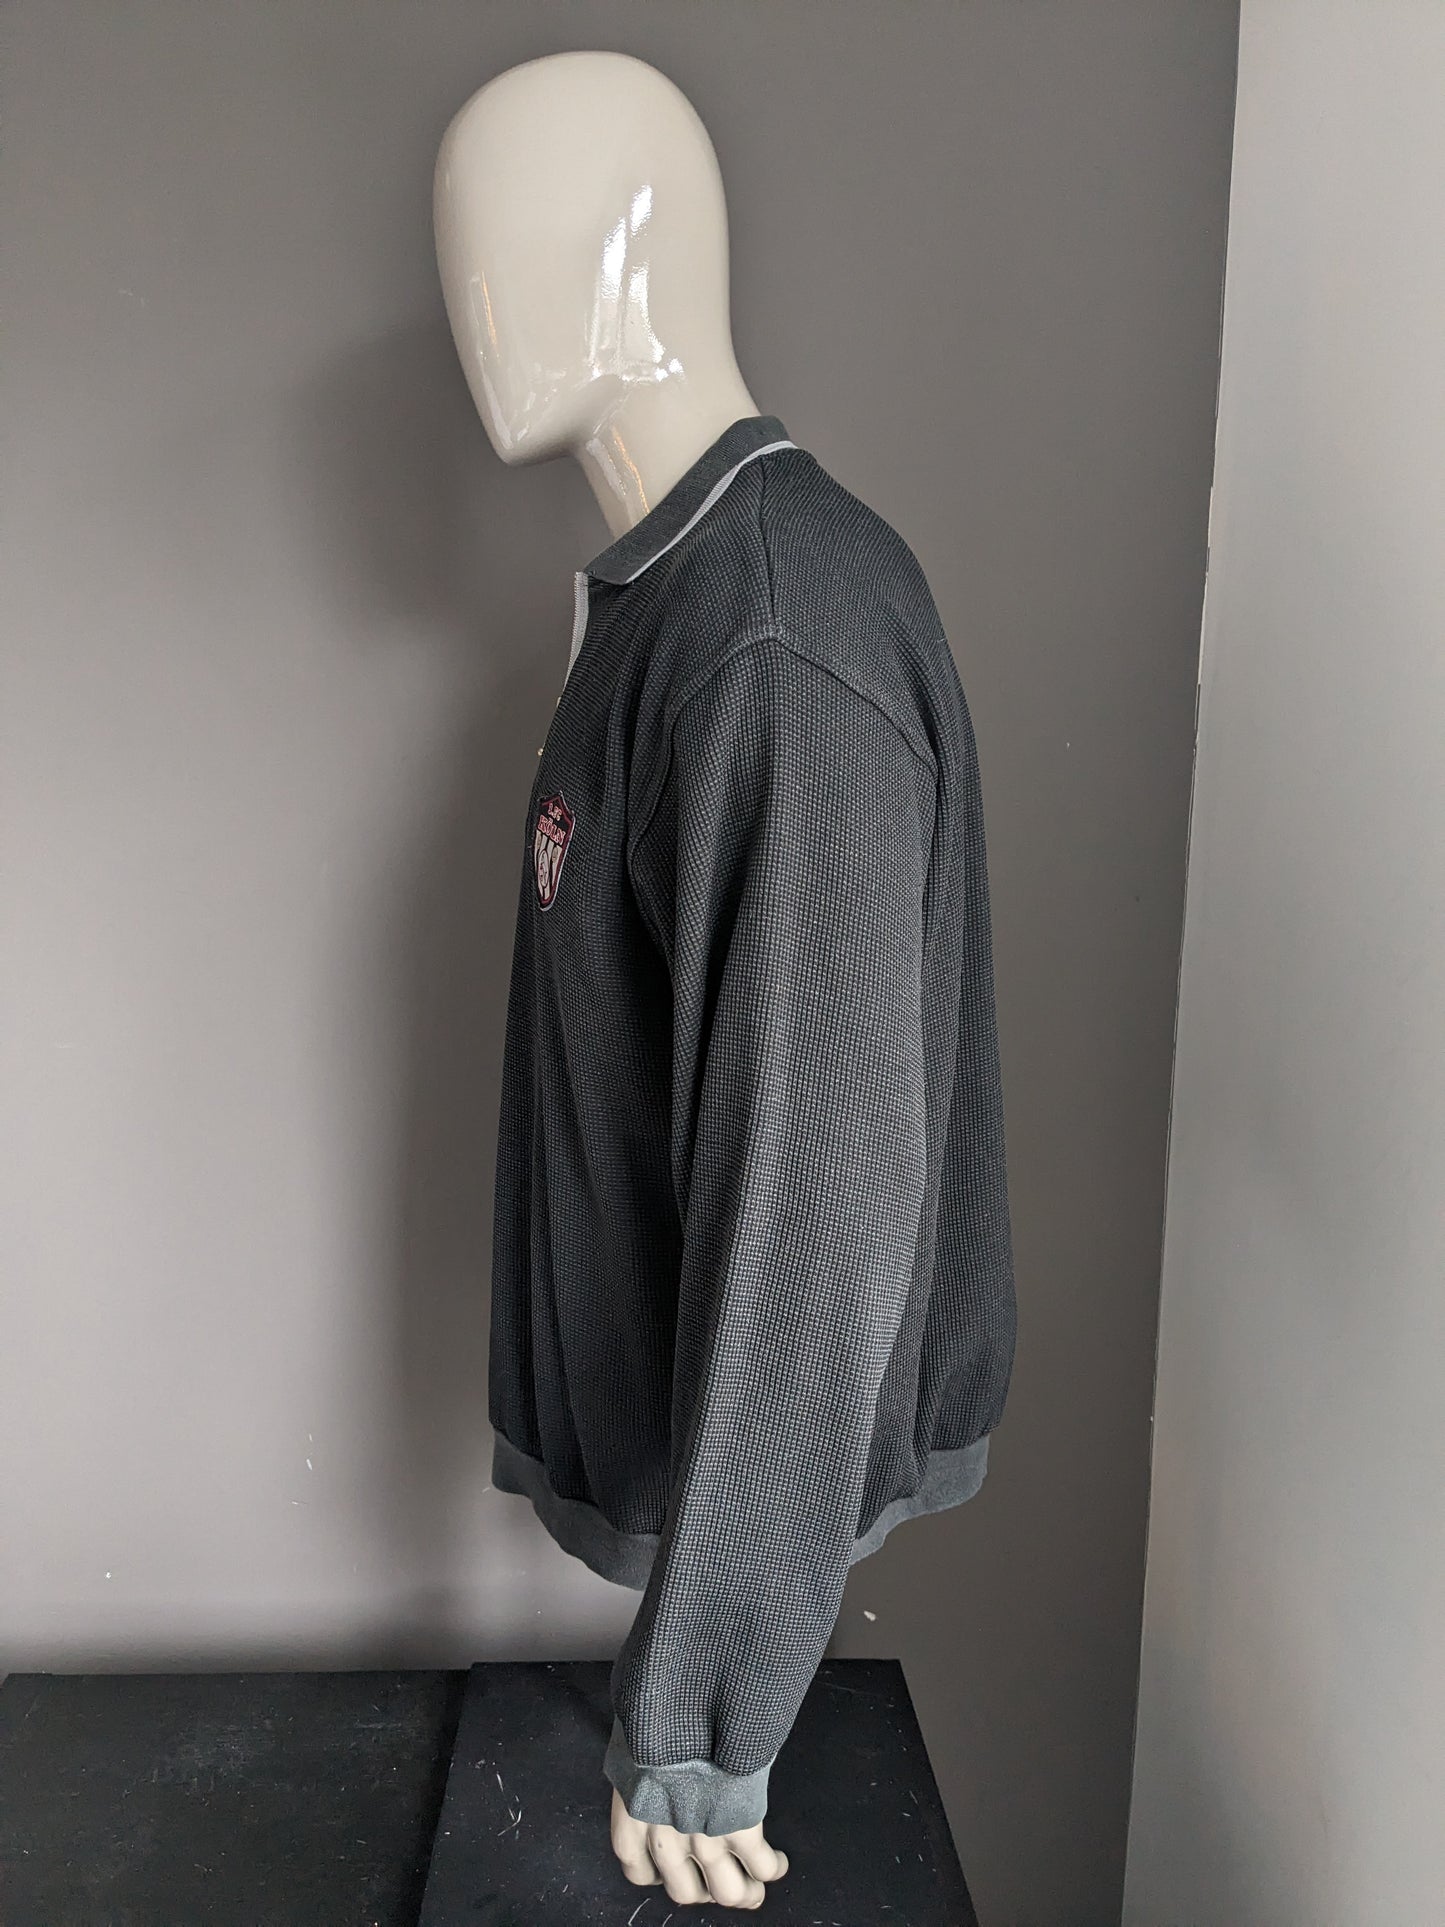 Unique jubilee FC Köln sweater with zipper. "50 years FC Köln". Dark gray colored. Size XL.